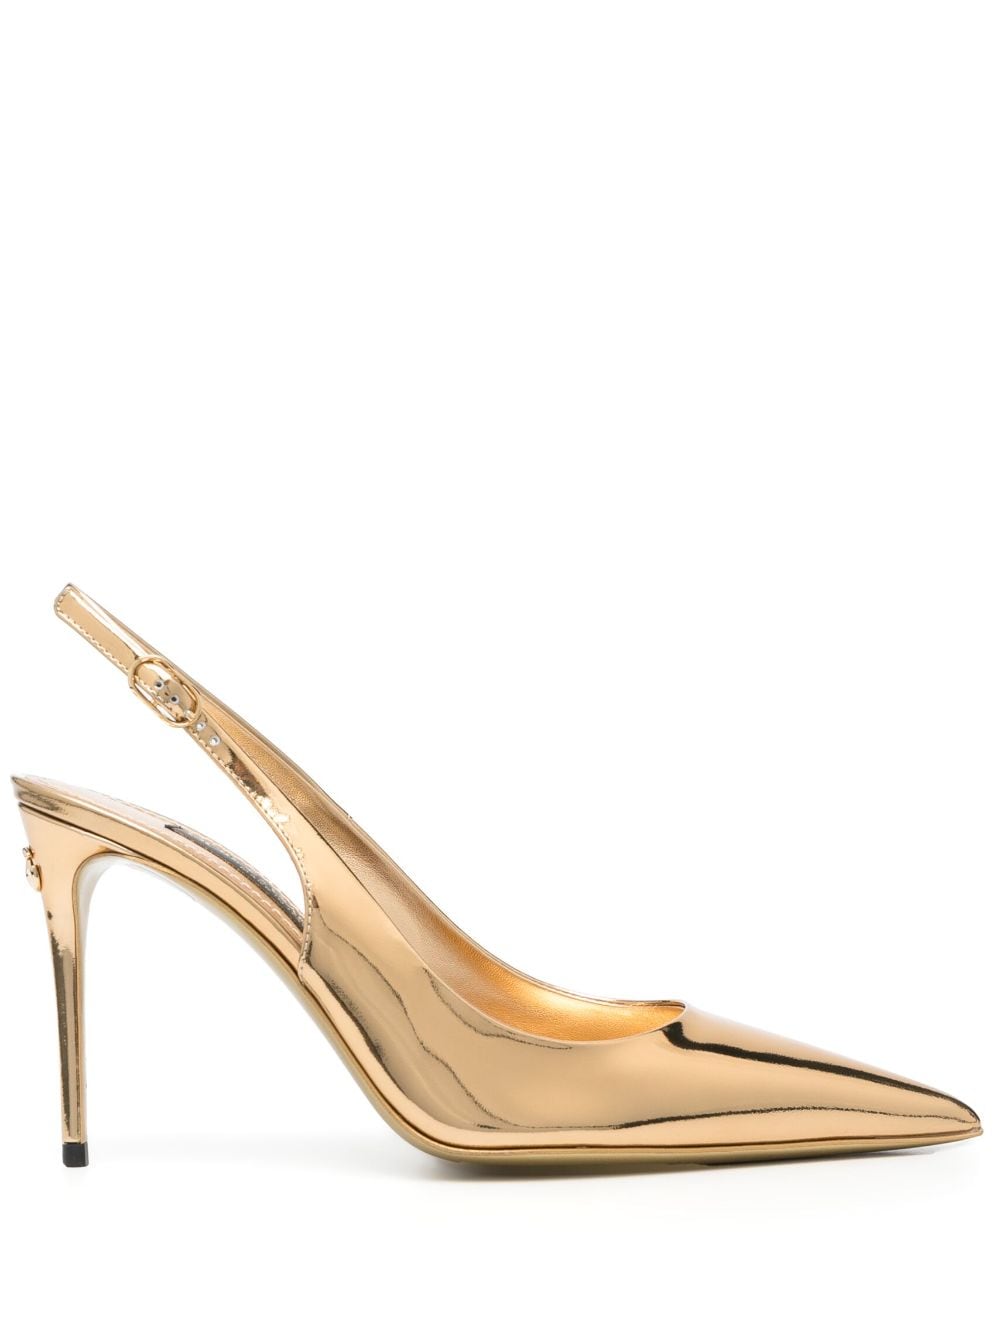 Golden Metallic Pointed-Toe Slingback Pumps for Women